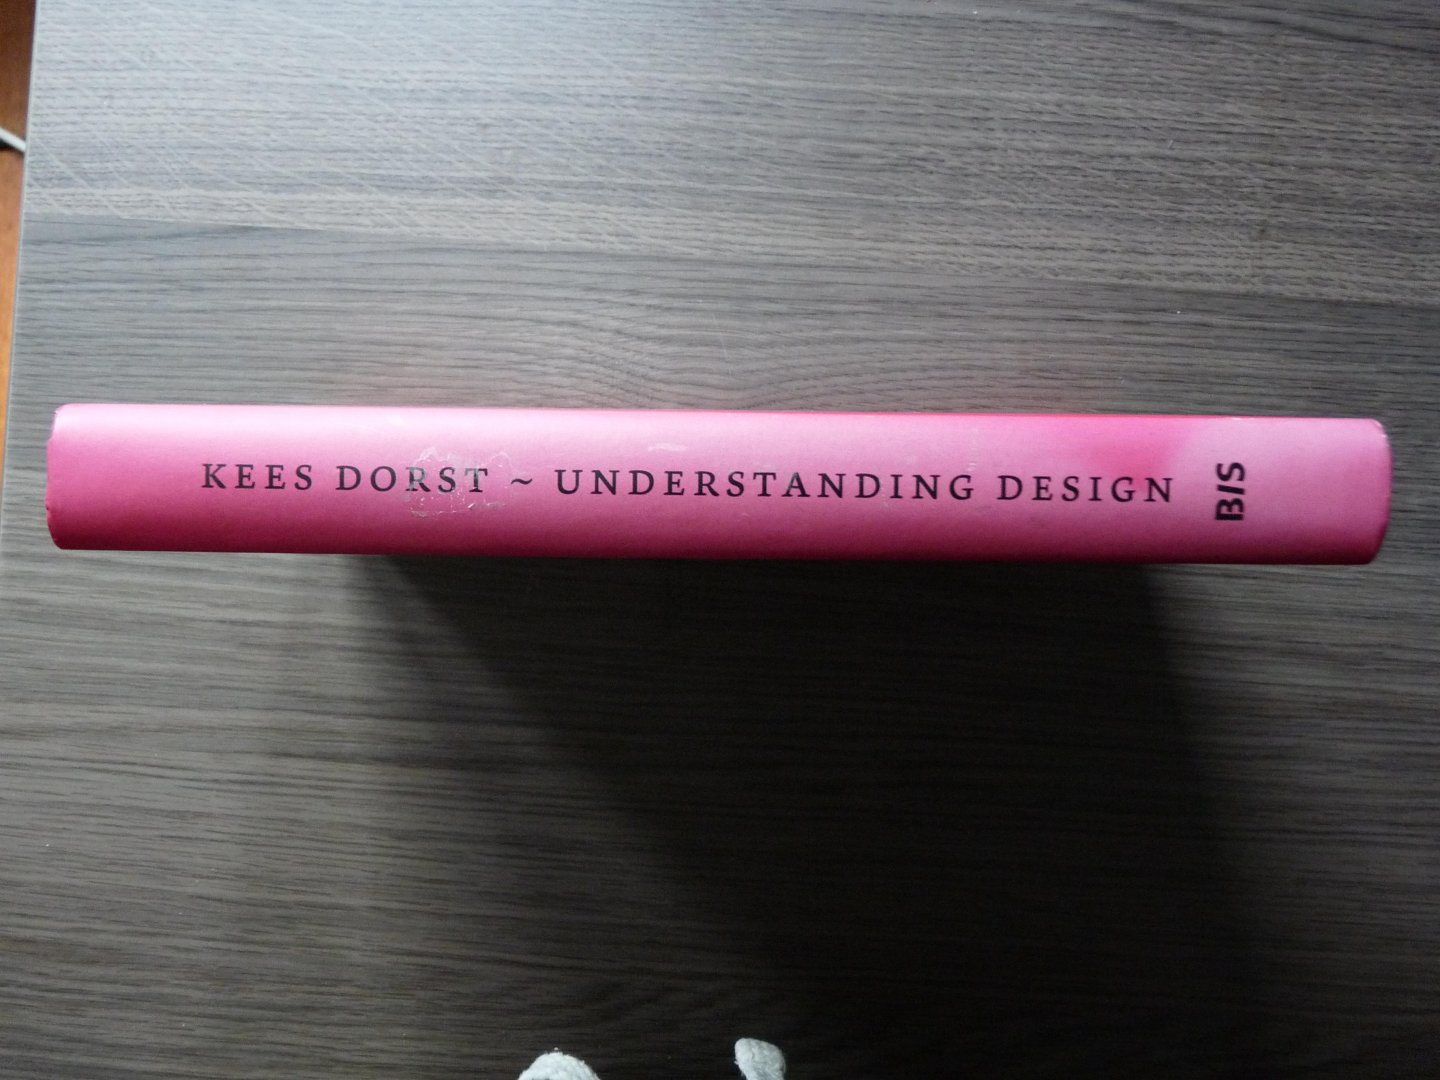 Dorst, K. - Understanding Design / 150 reflections on being a designer (gesigneerd)